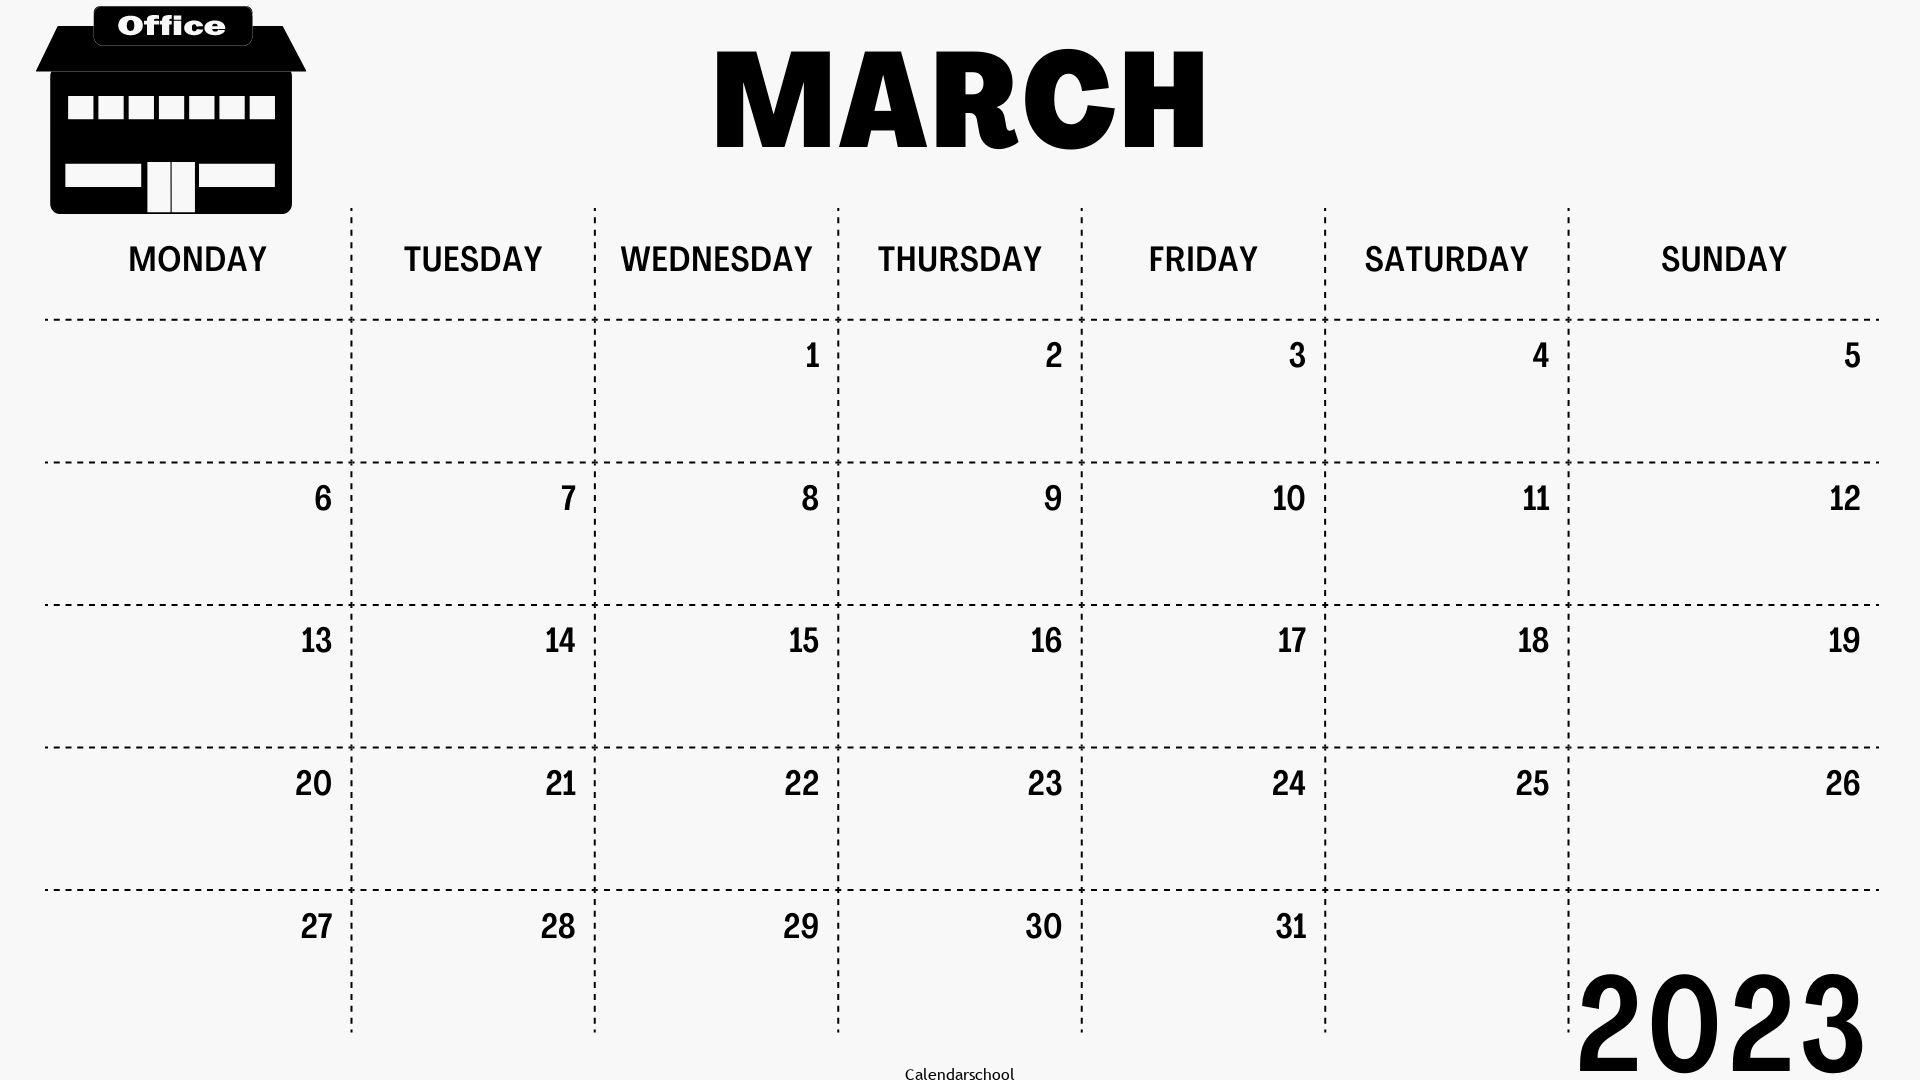 2023 March Lunar Calendar